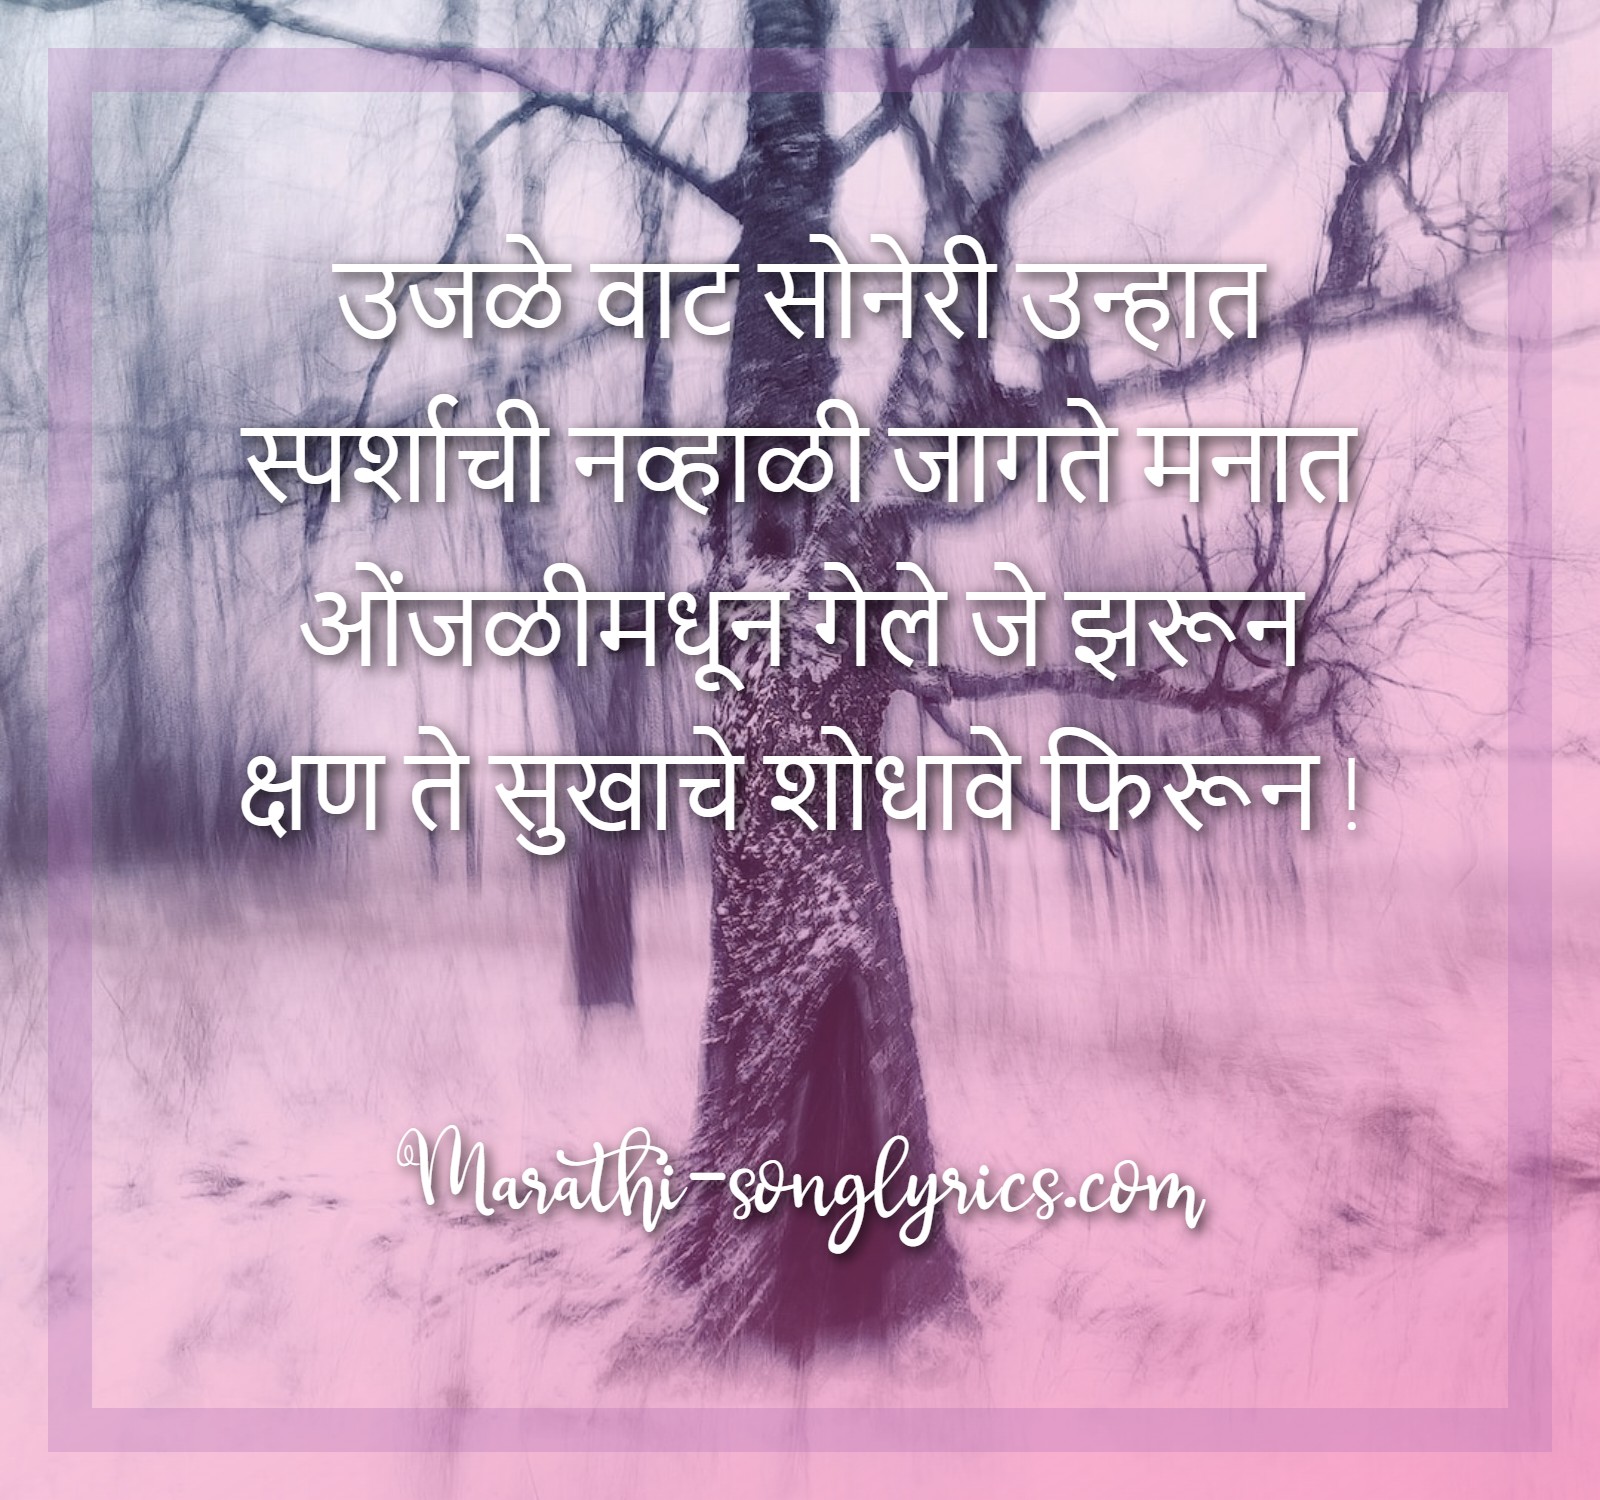 उजळे वाट सोनेरी उन्हात| Ujale wat soneri unhat Lyrics in Marathi – Jayshree Shivram,Ravindra Sathe Lyrics